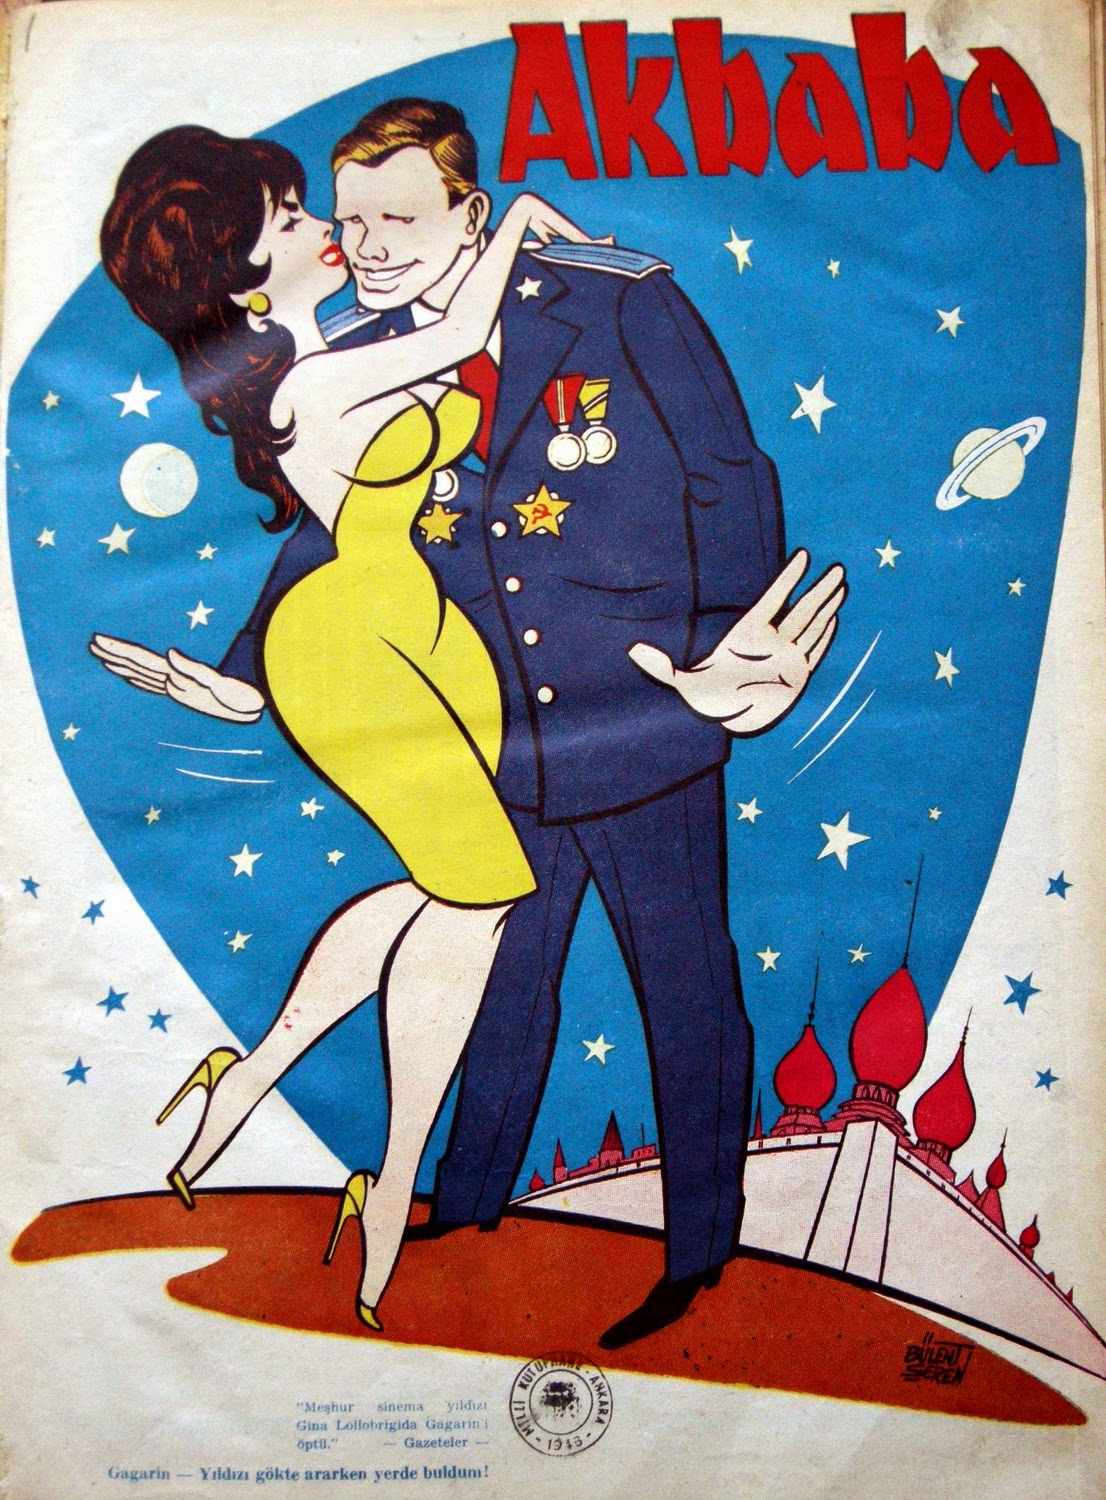 Гагарин и джина лоллобриджида. Джина Лоллобриджида целует Юрия Гагарина.